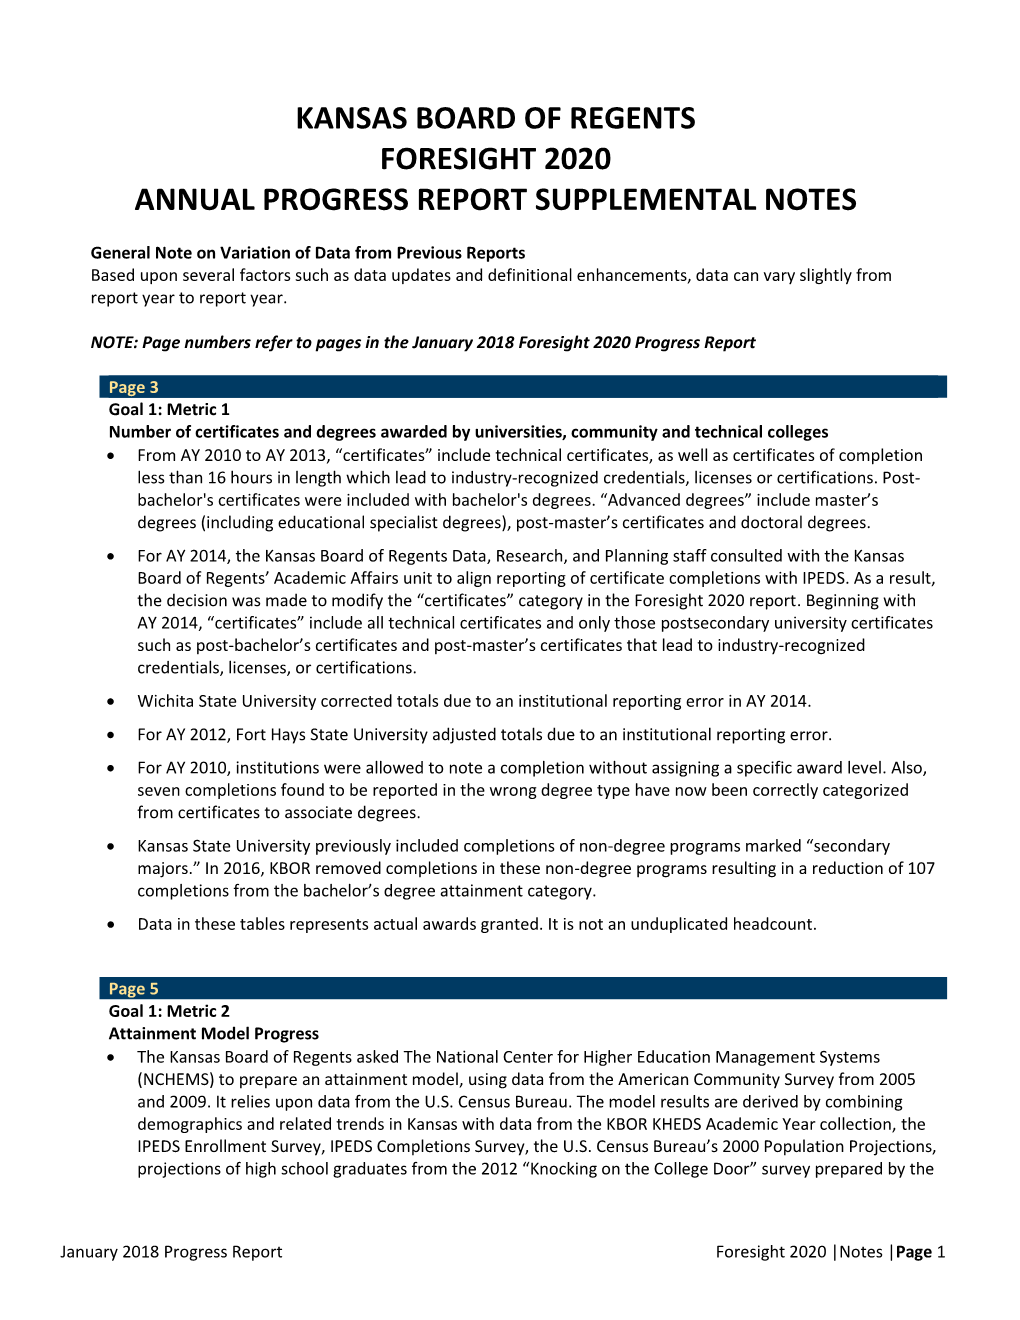 Kansas Board of Regents Foresight 2020 Annual Progress Report Supplemental Notes